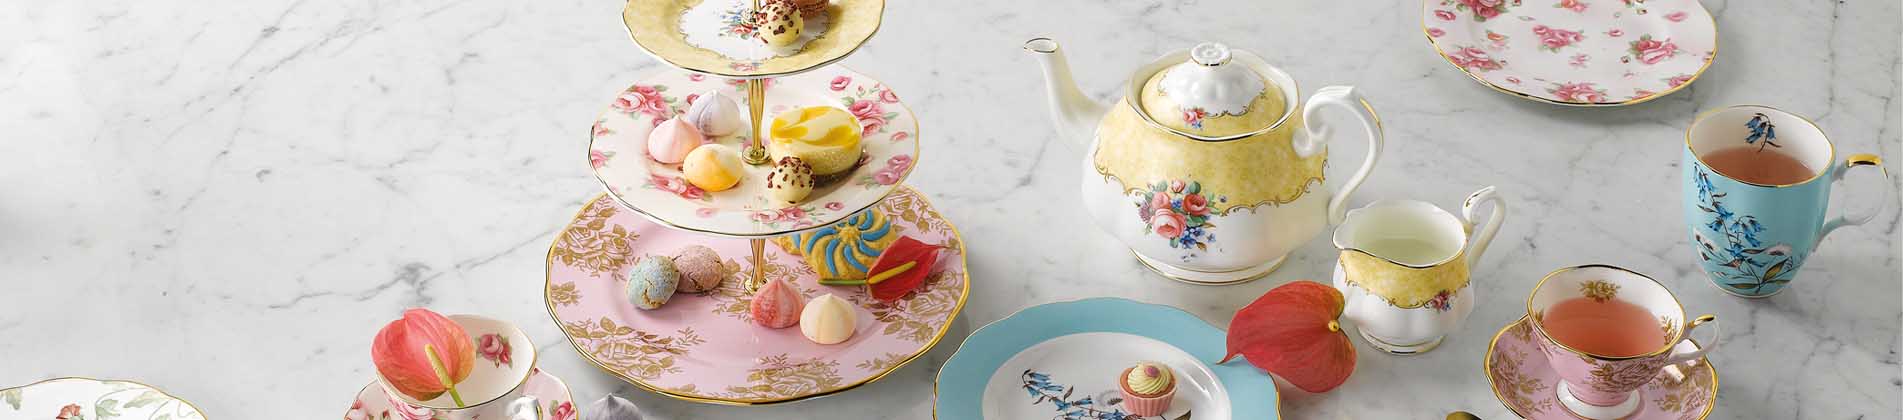 100 Years Collection Teaware  Tableware -Place Sets, Tea Sets Royal  Albert® Australia